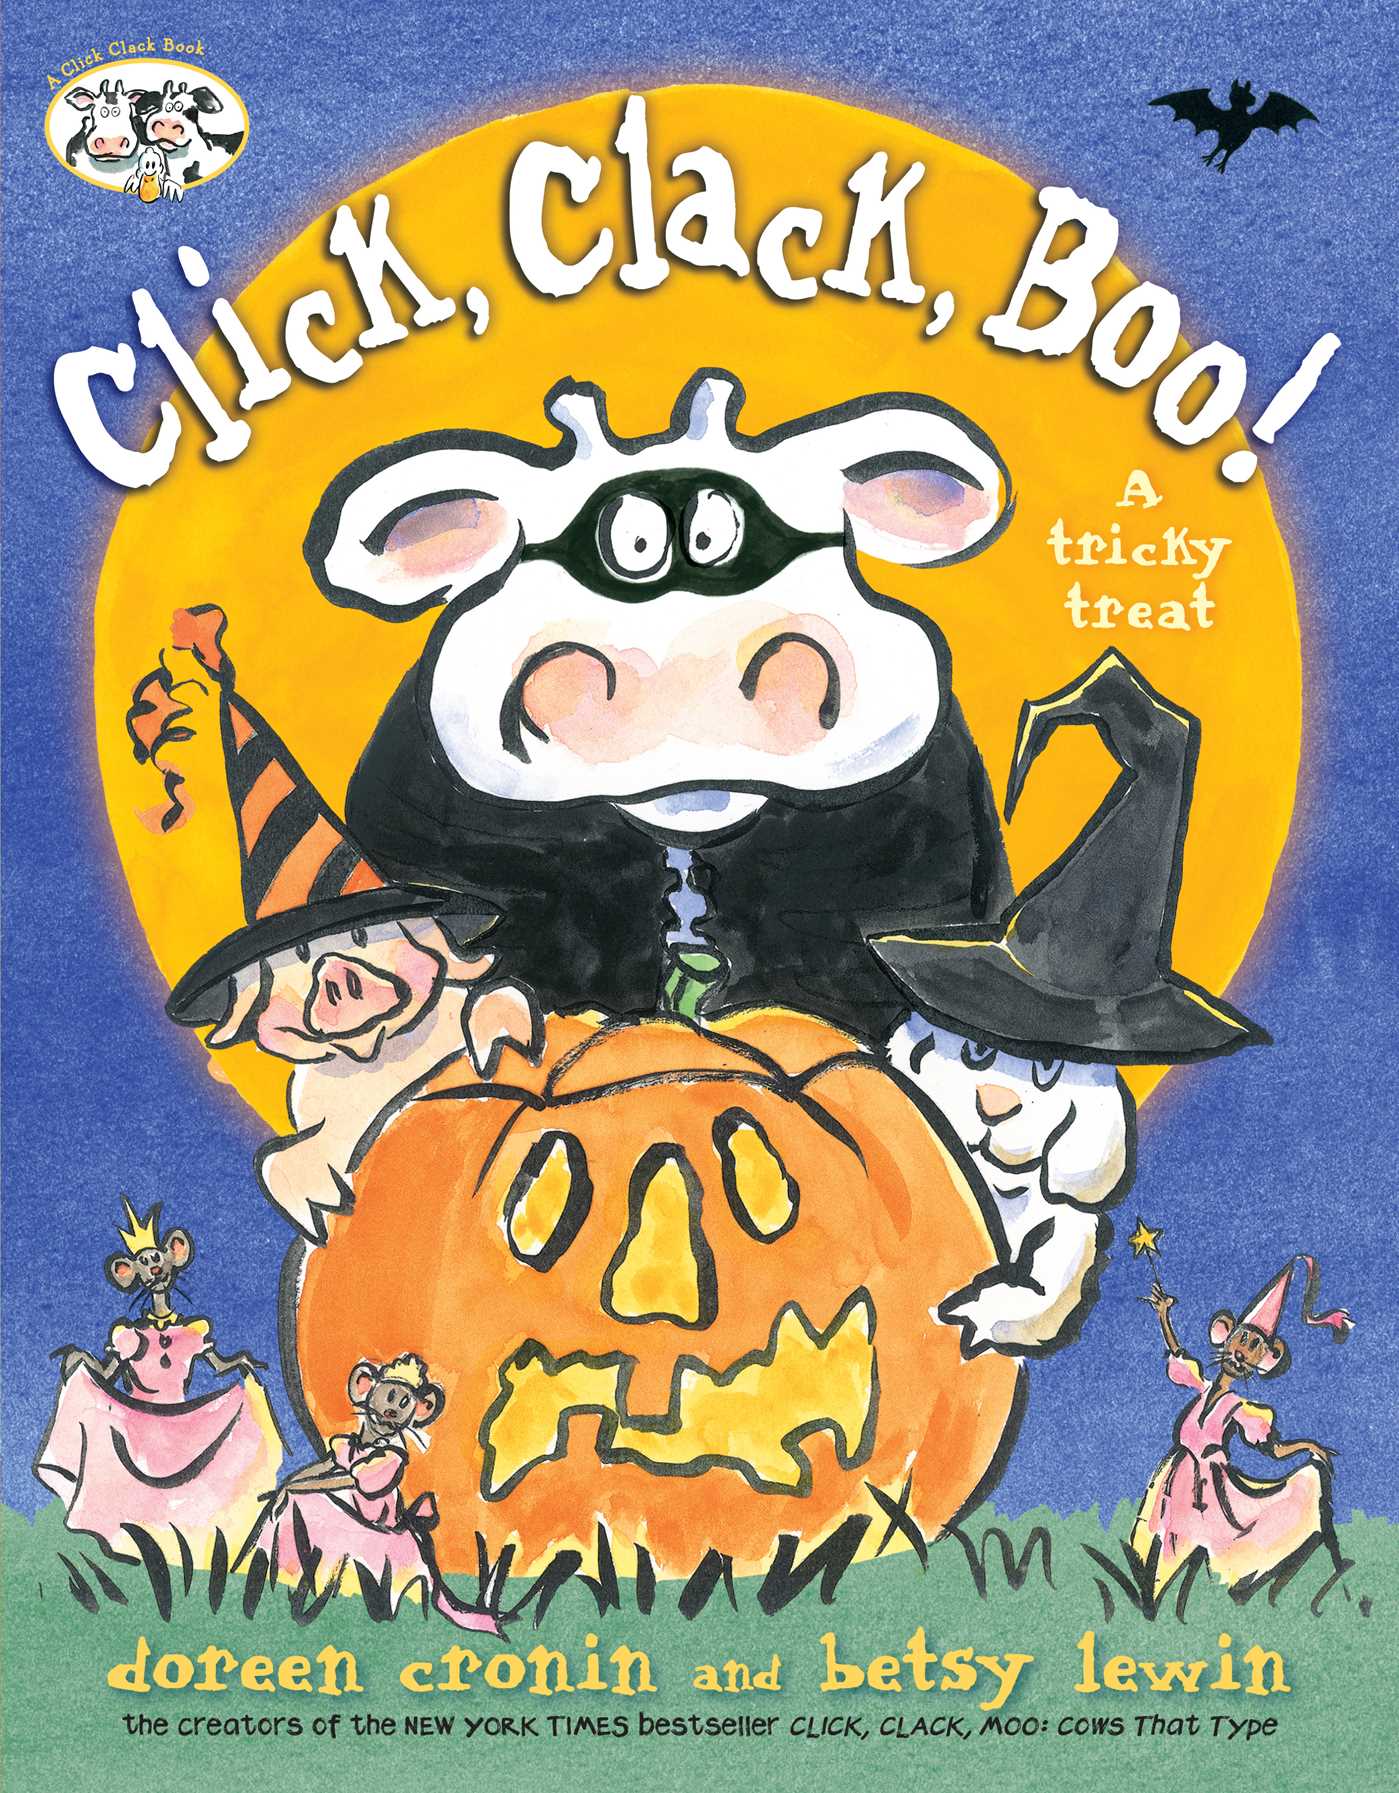 Click, Clack, Boo! : A Tricky Treat